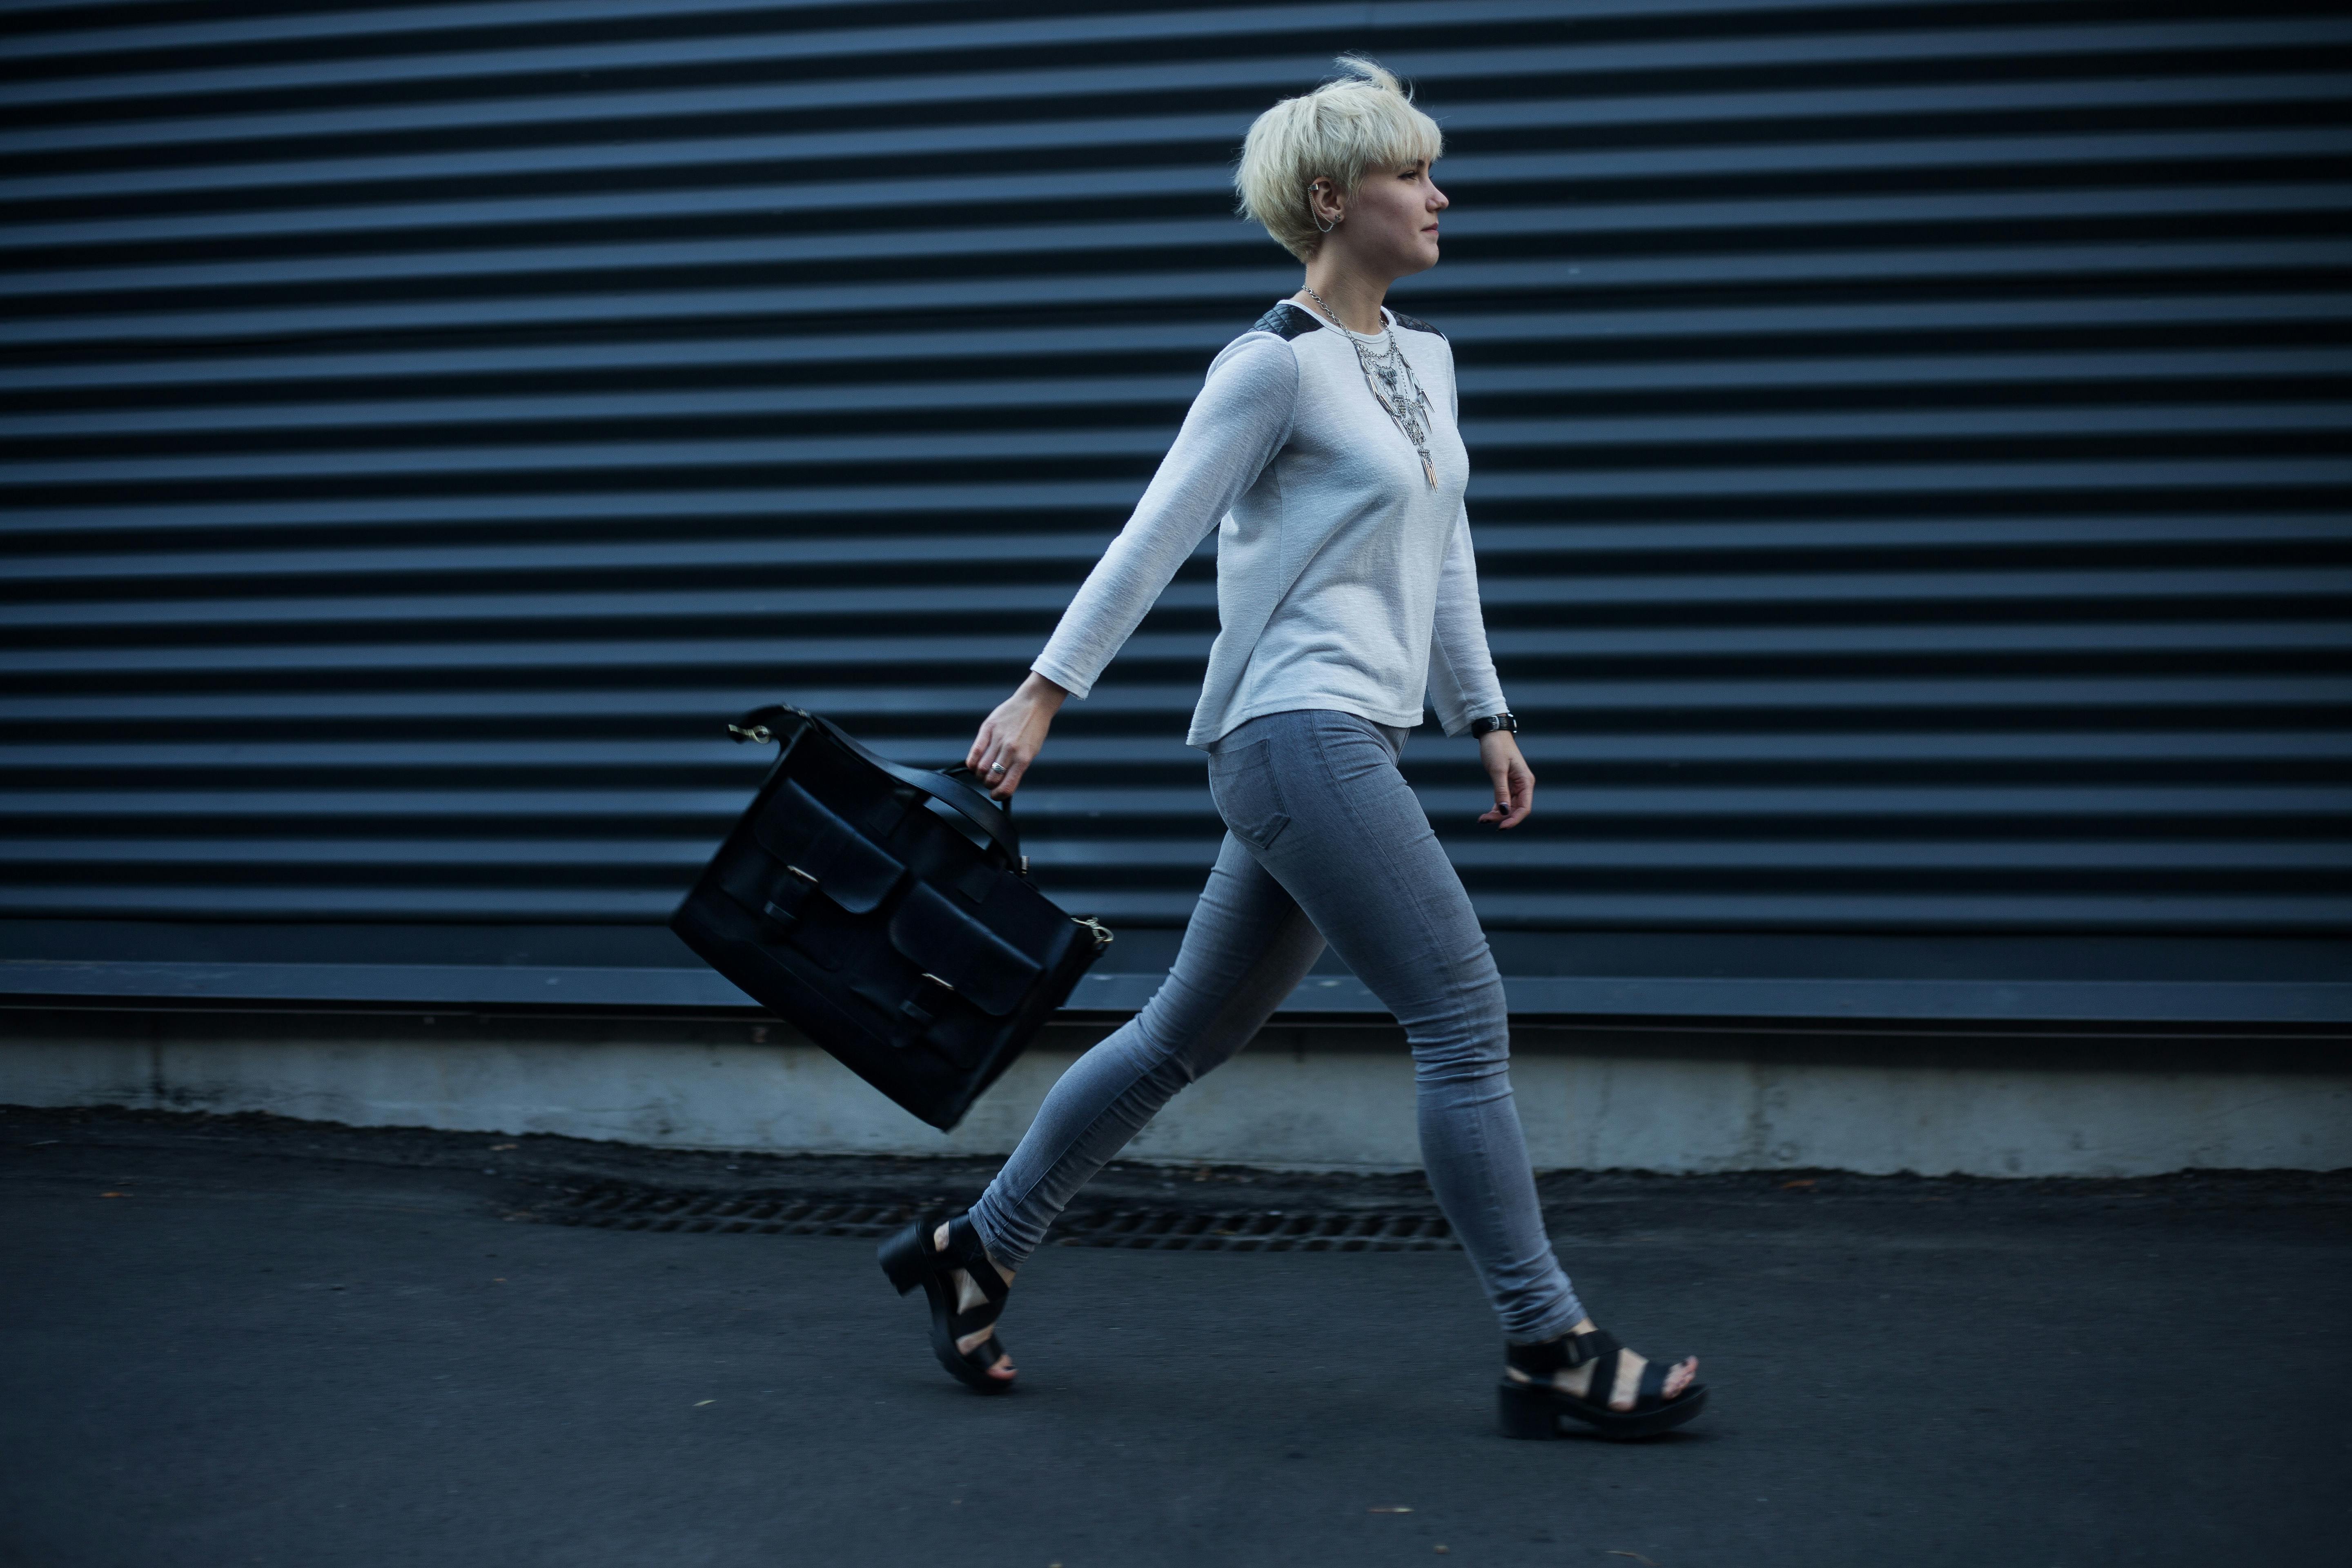  Woman walking in the street holding fashion handbag